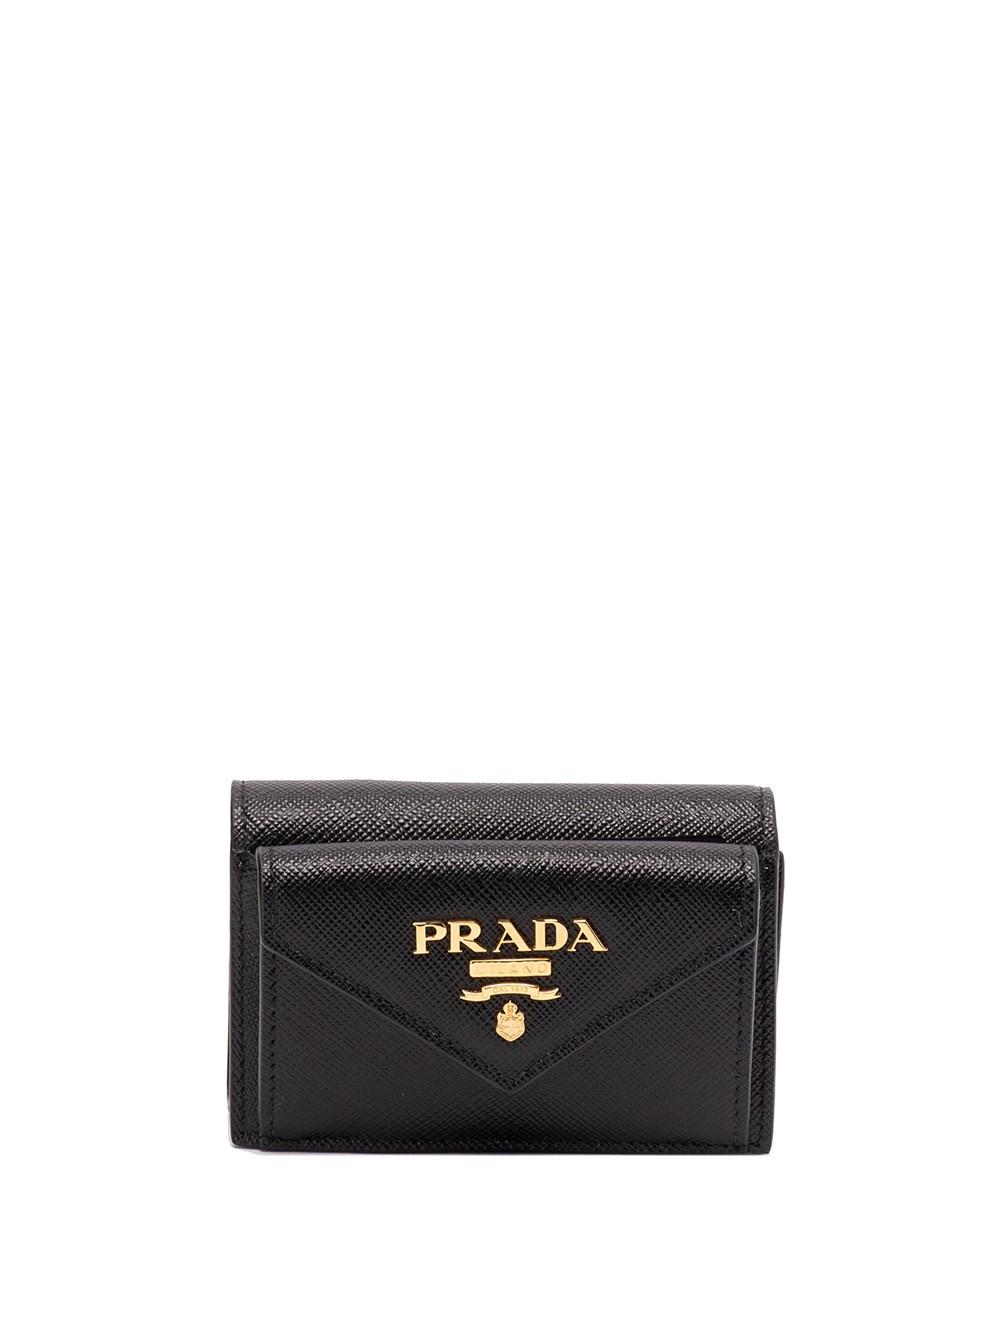 Prada Ladies Leather Purse Wallet Black/gold | ONU